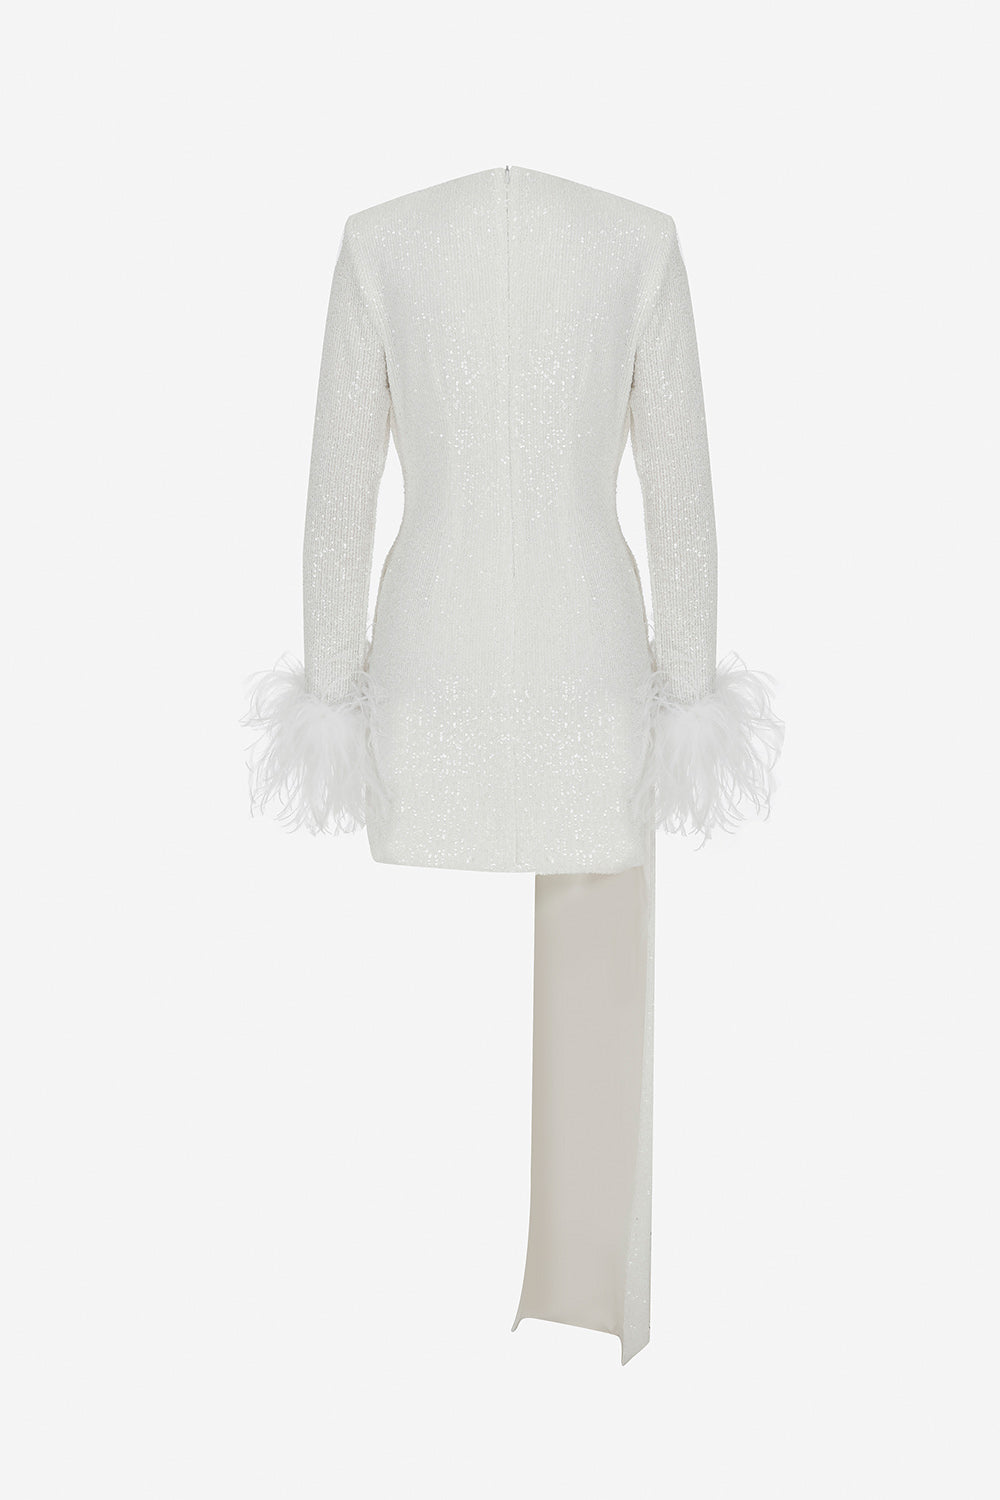 Lou Lou White Sequin Mini Dress with Feathers